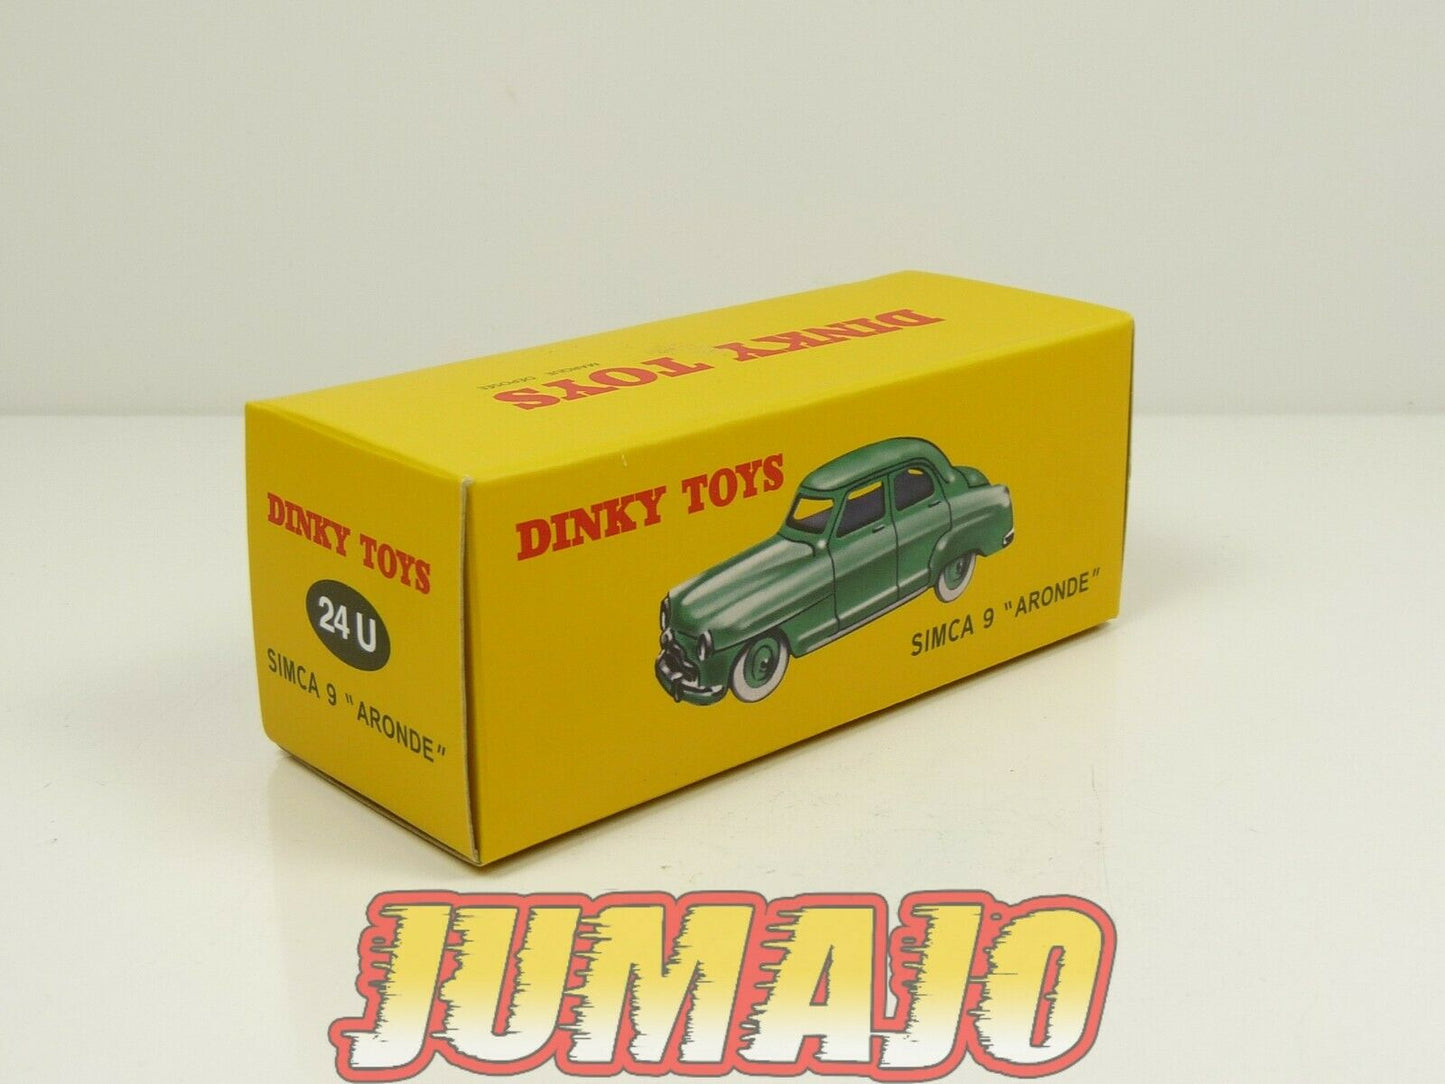 DT360 voiture 1/43 réédition 24U DINKY TOYS Atlas : SIMCA 9 "ARONDE"